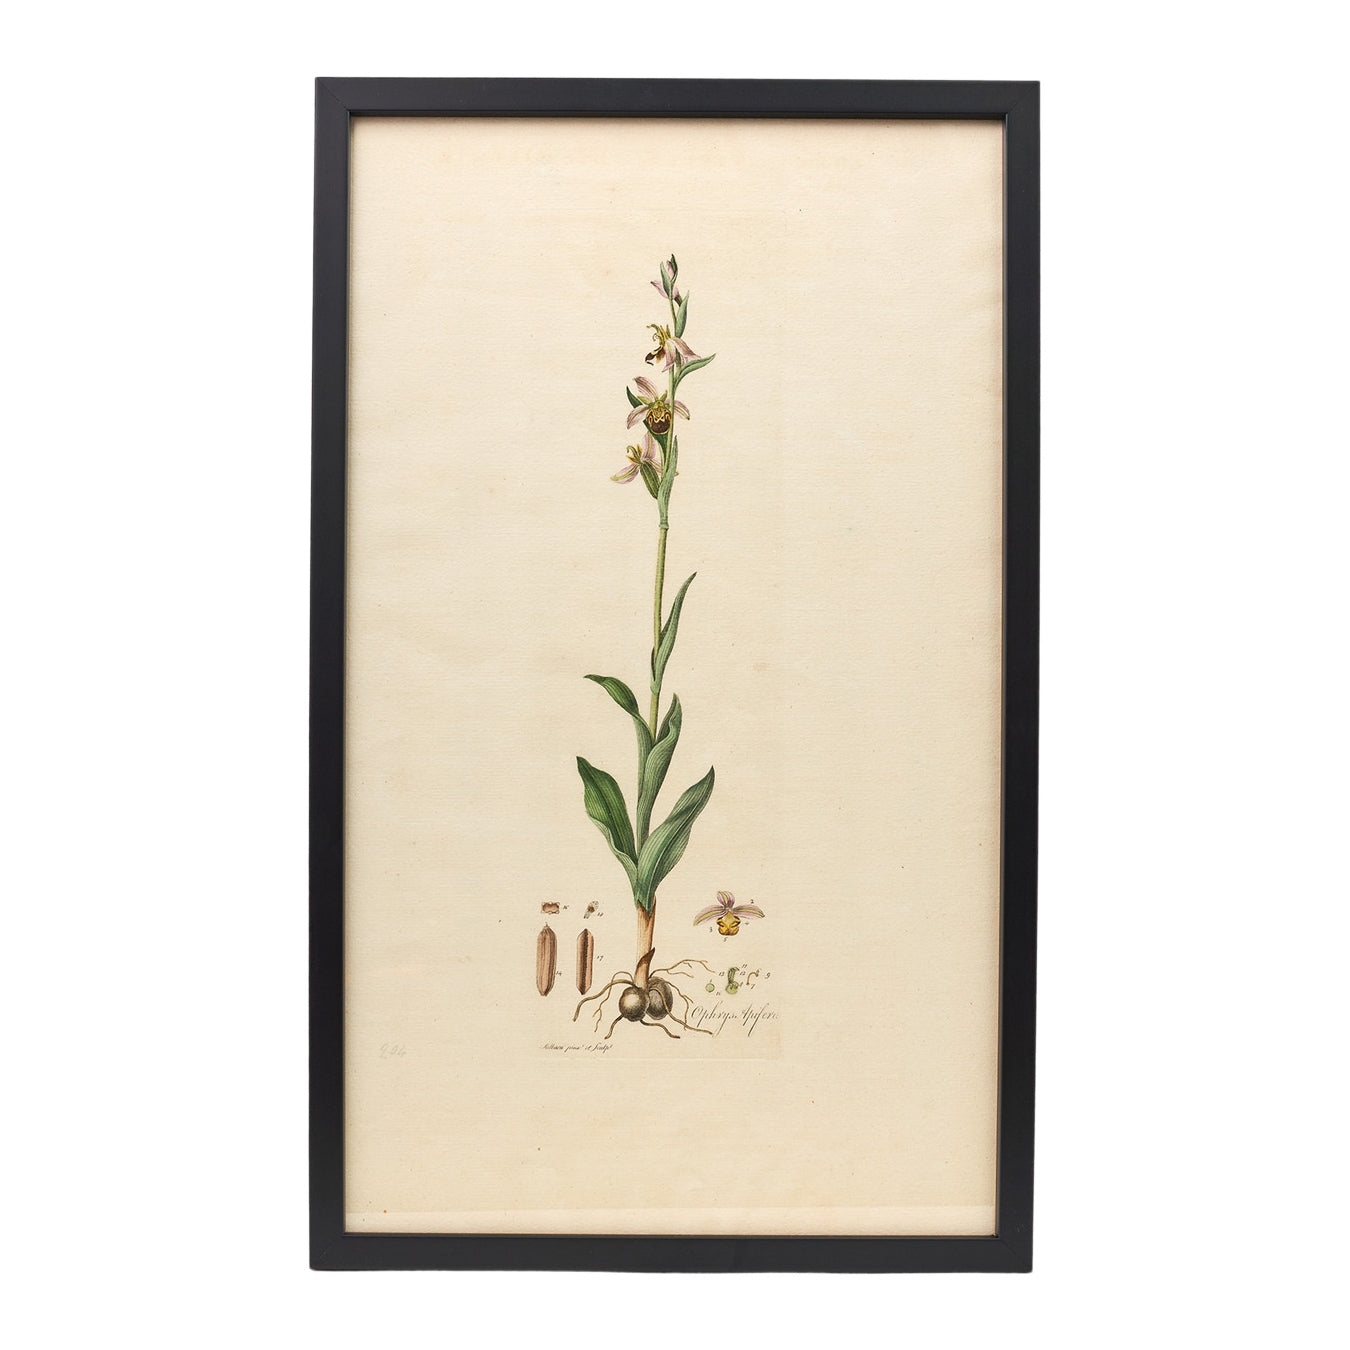 Ophrys Apifera ‘Flora Londinensis’ Botanical Print - Framed